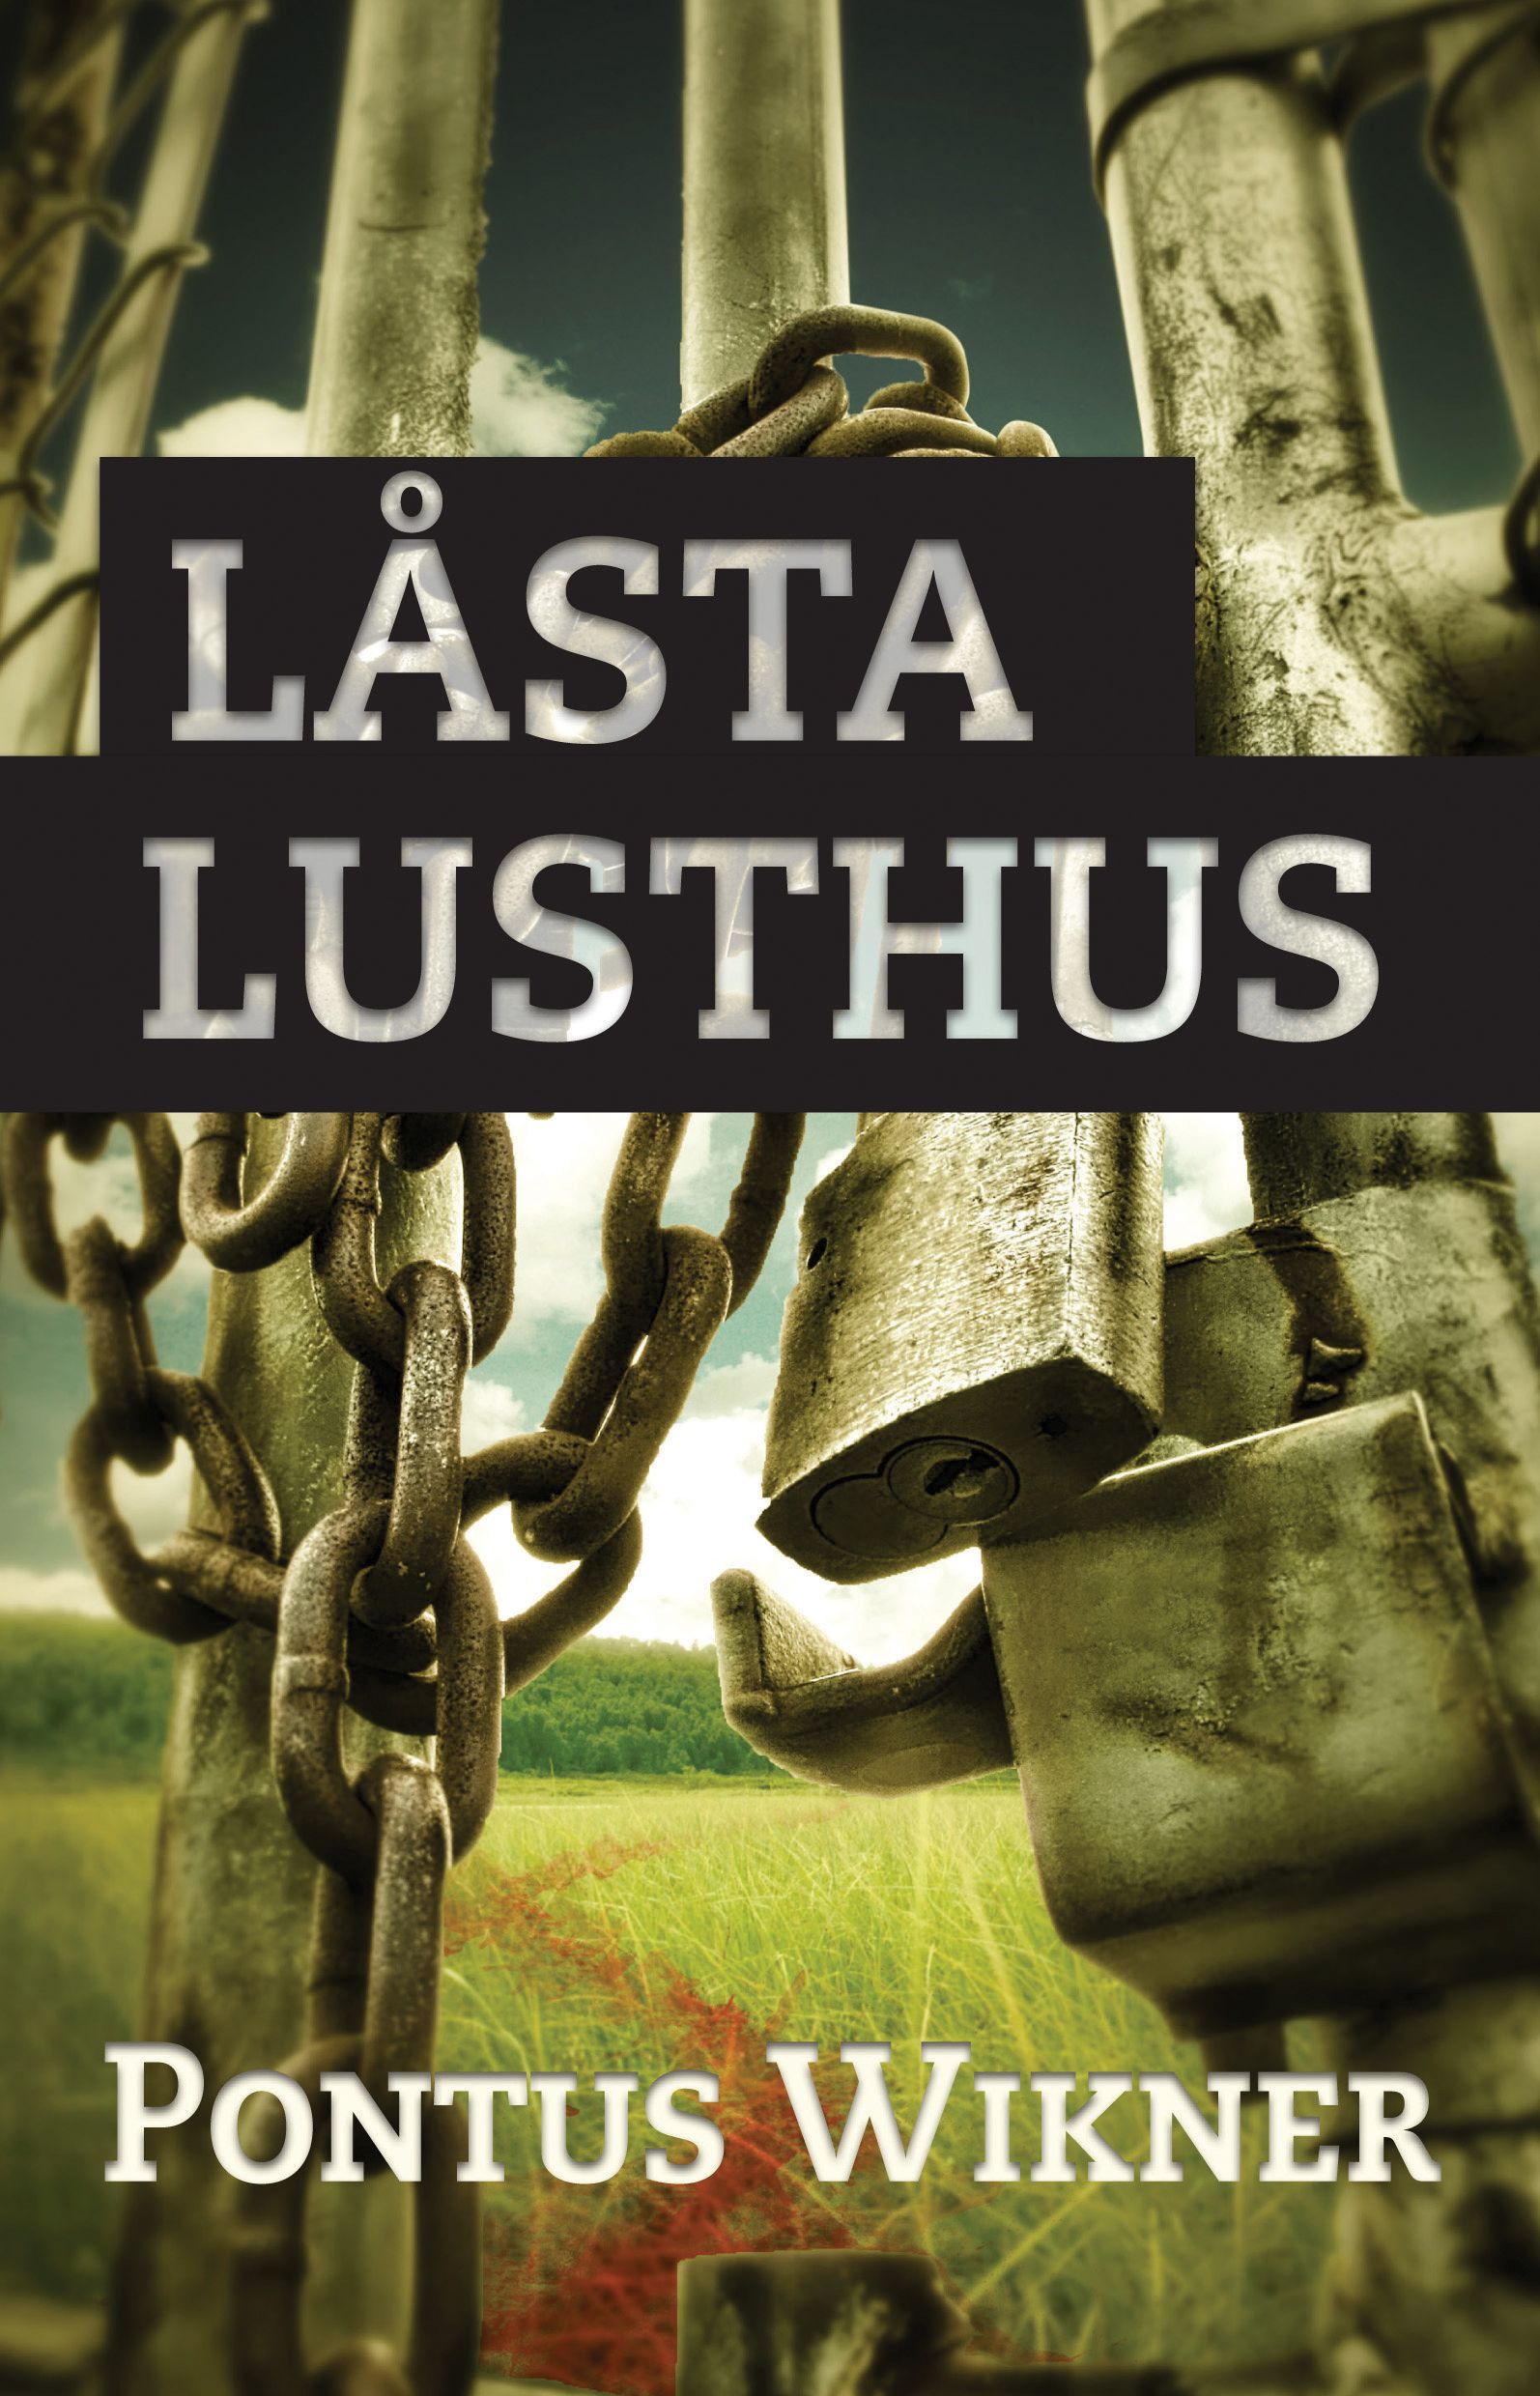 Låsta lusthus, eBook by Pontus Wikner